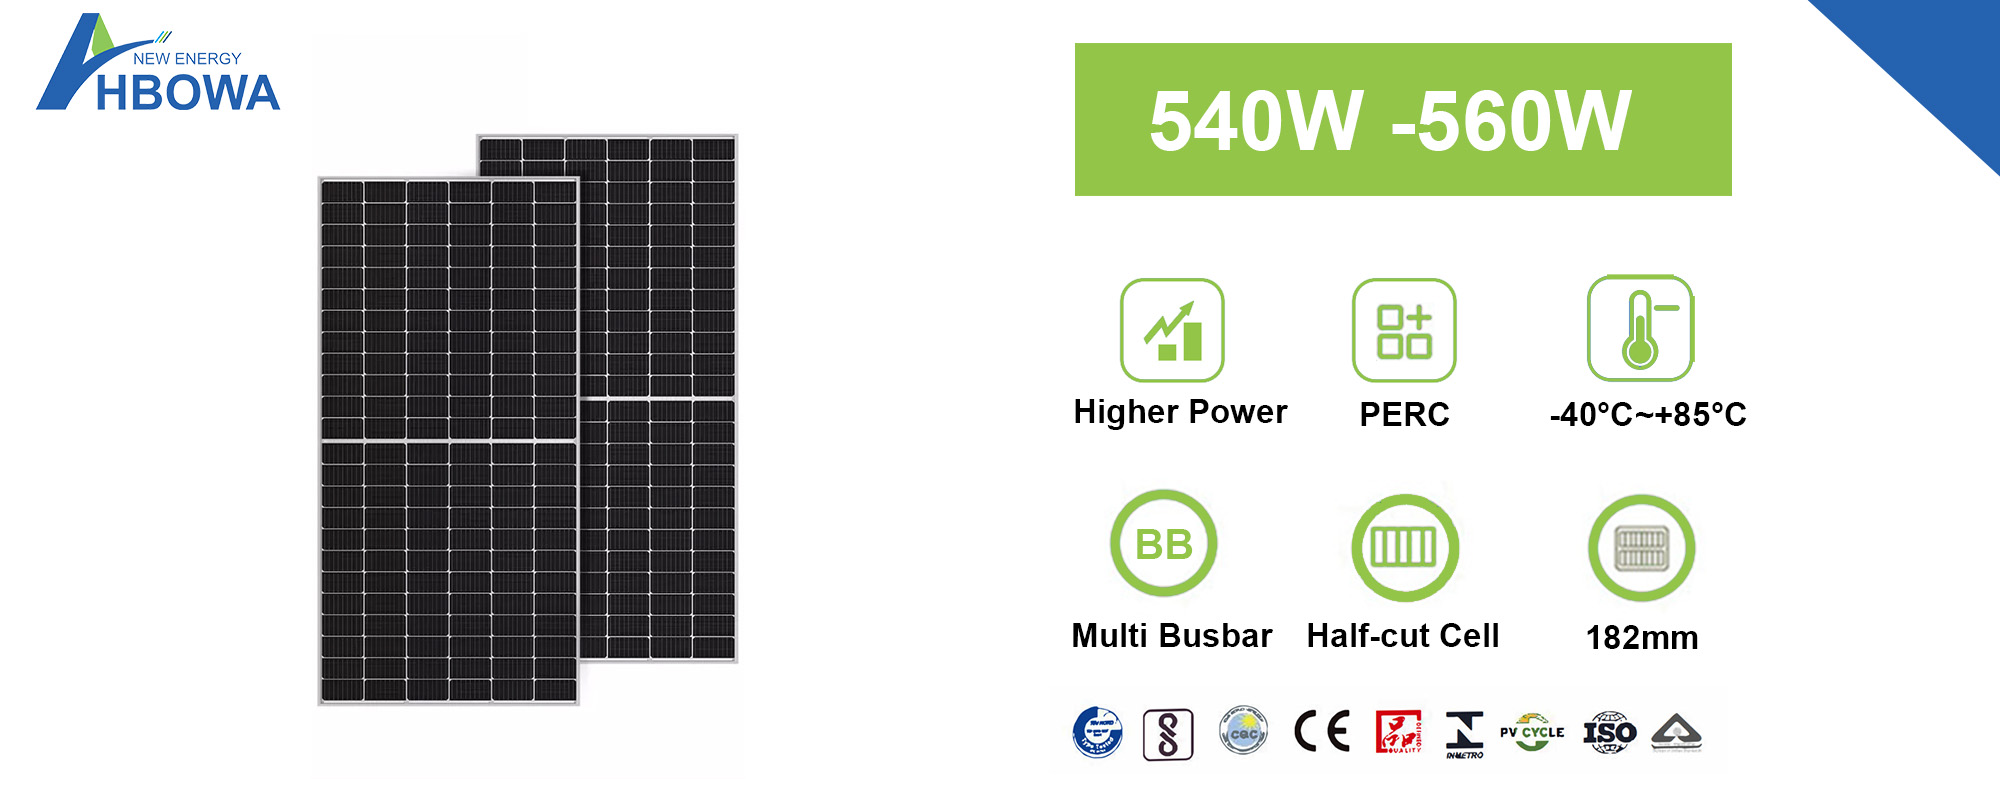 540W 560W solar panel perc mono-facial type feature